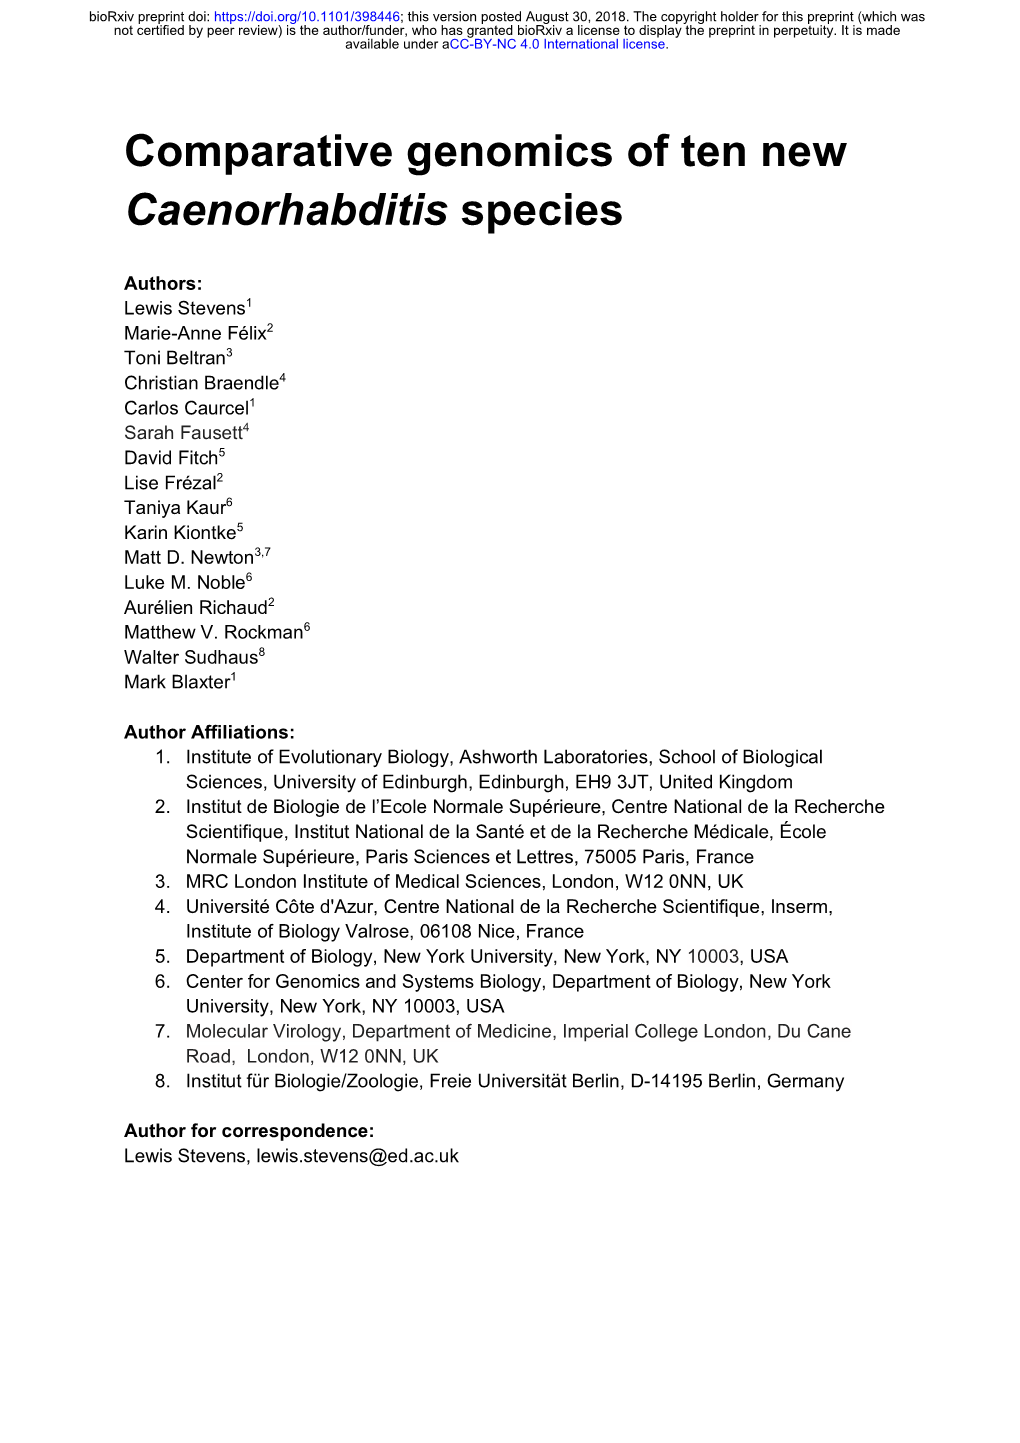 Comparative Genomics of Ten New Caenorhabditis Species